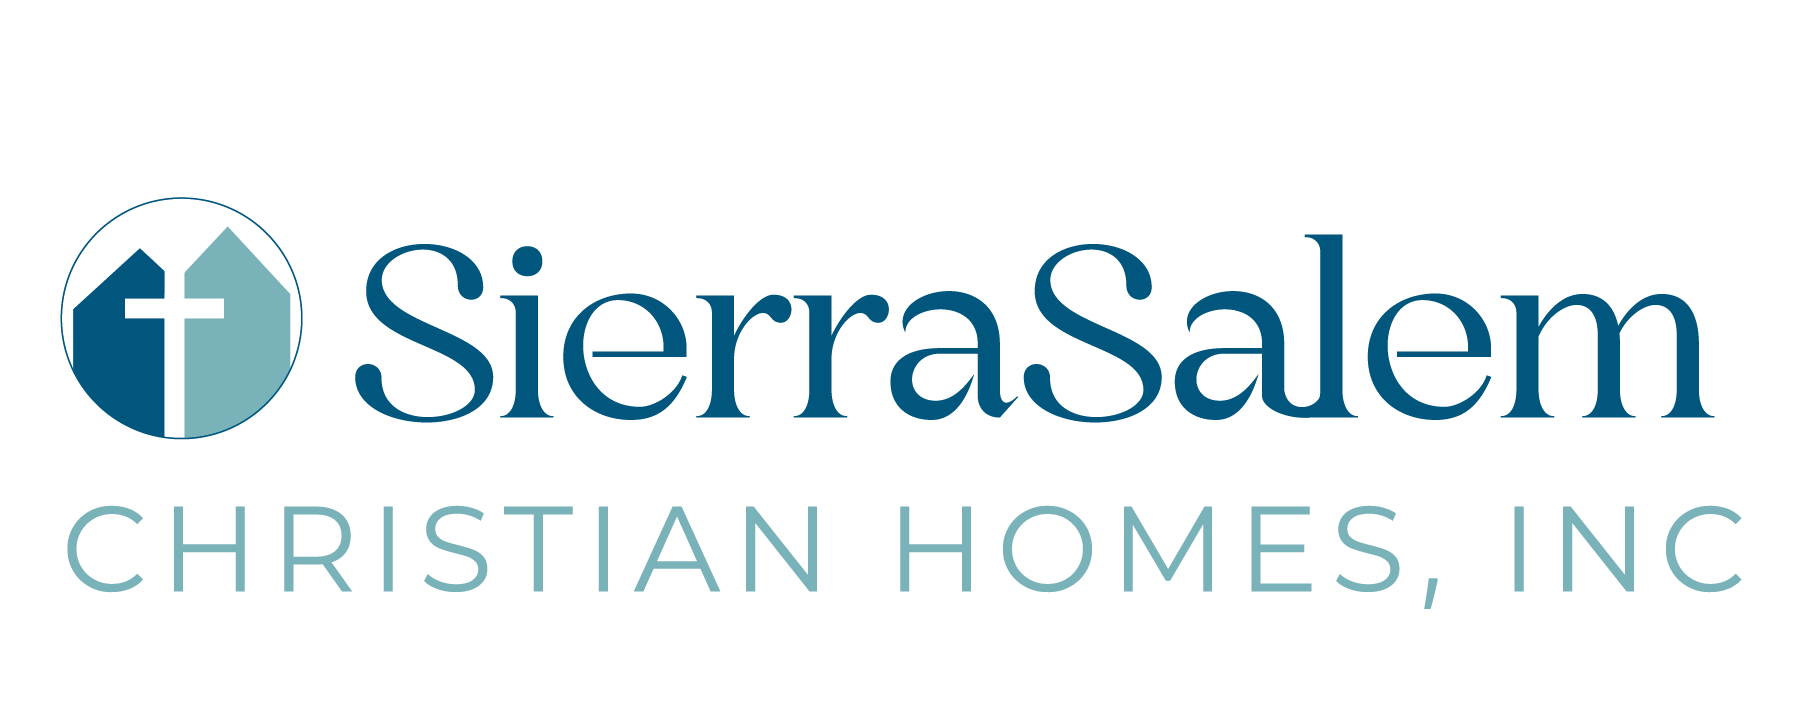 Sierra Salem Christian Homes, Inc.